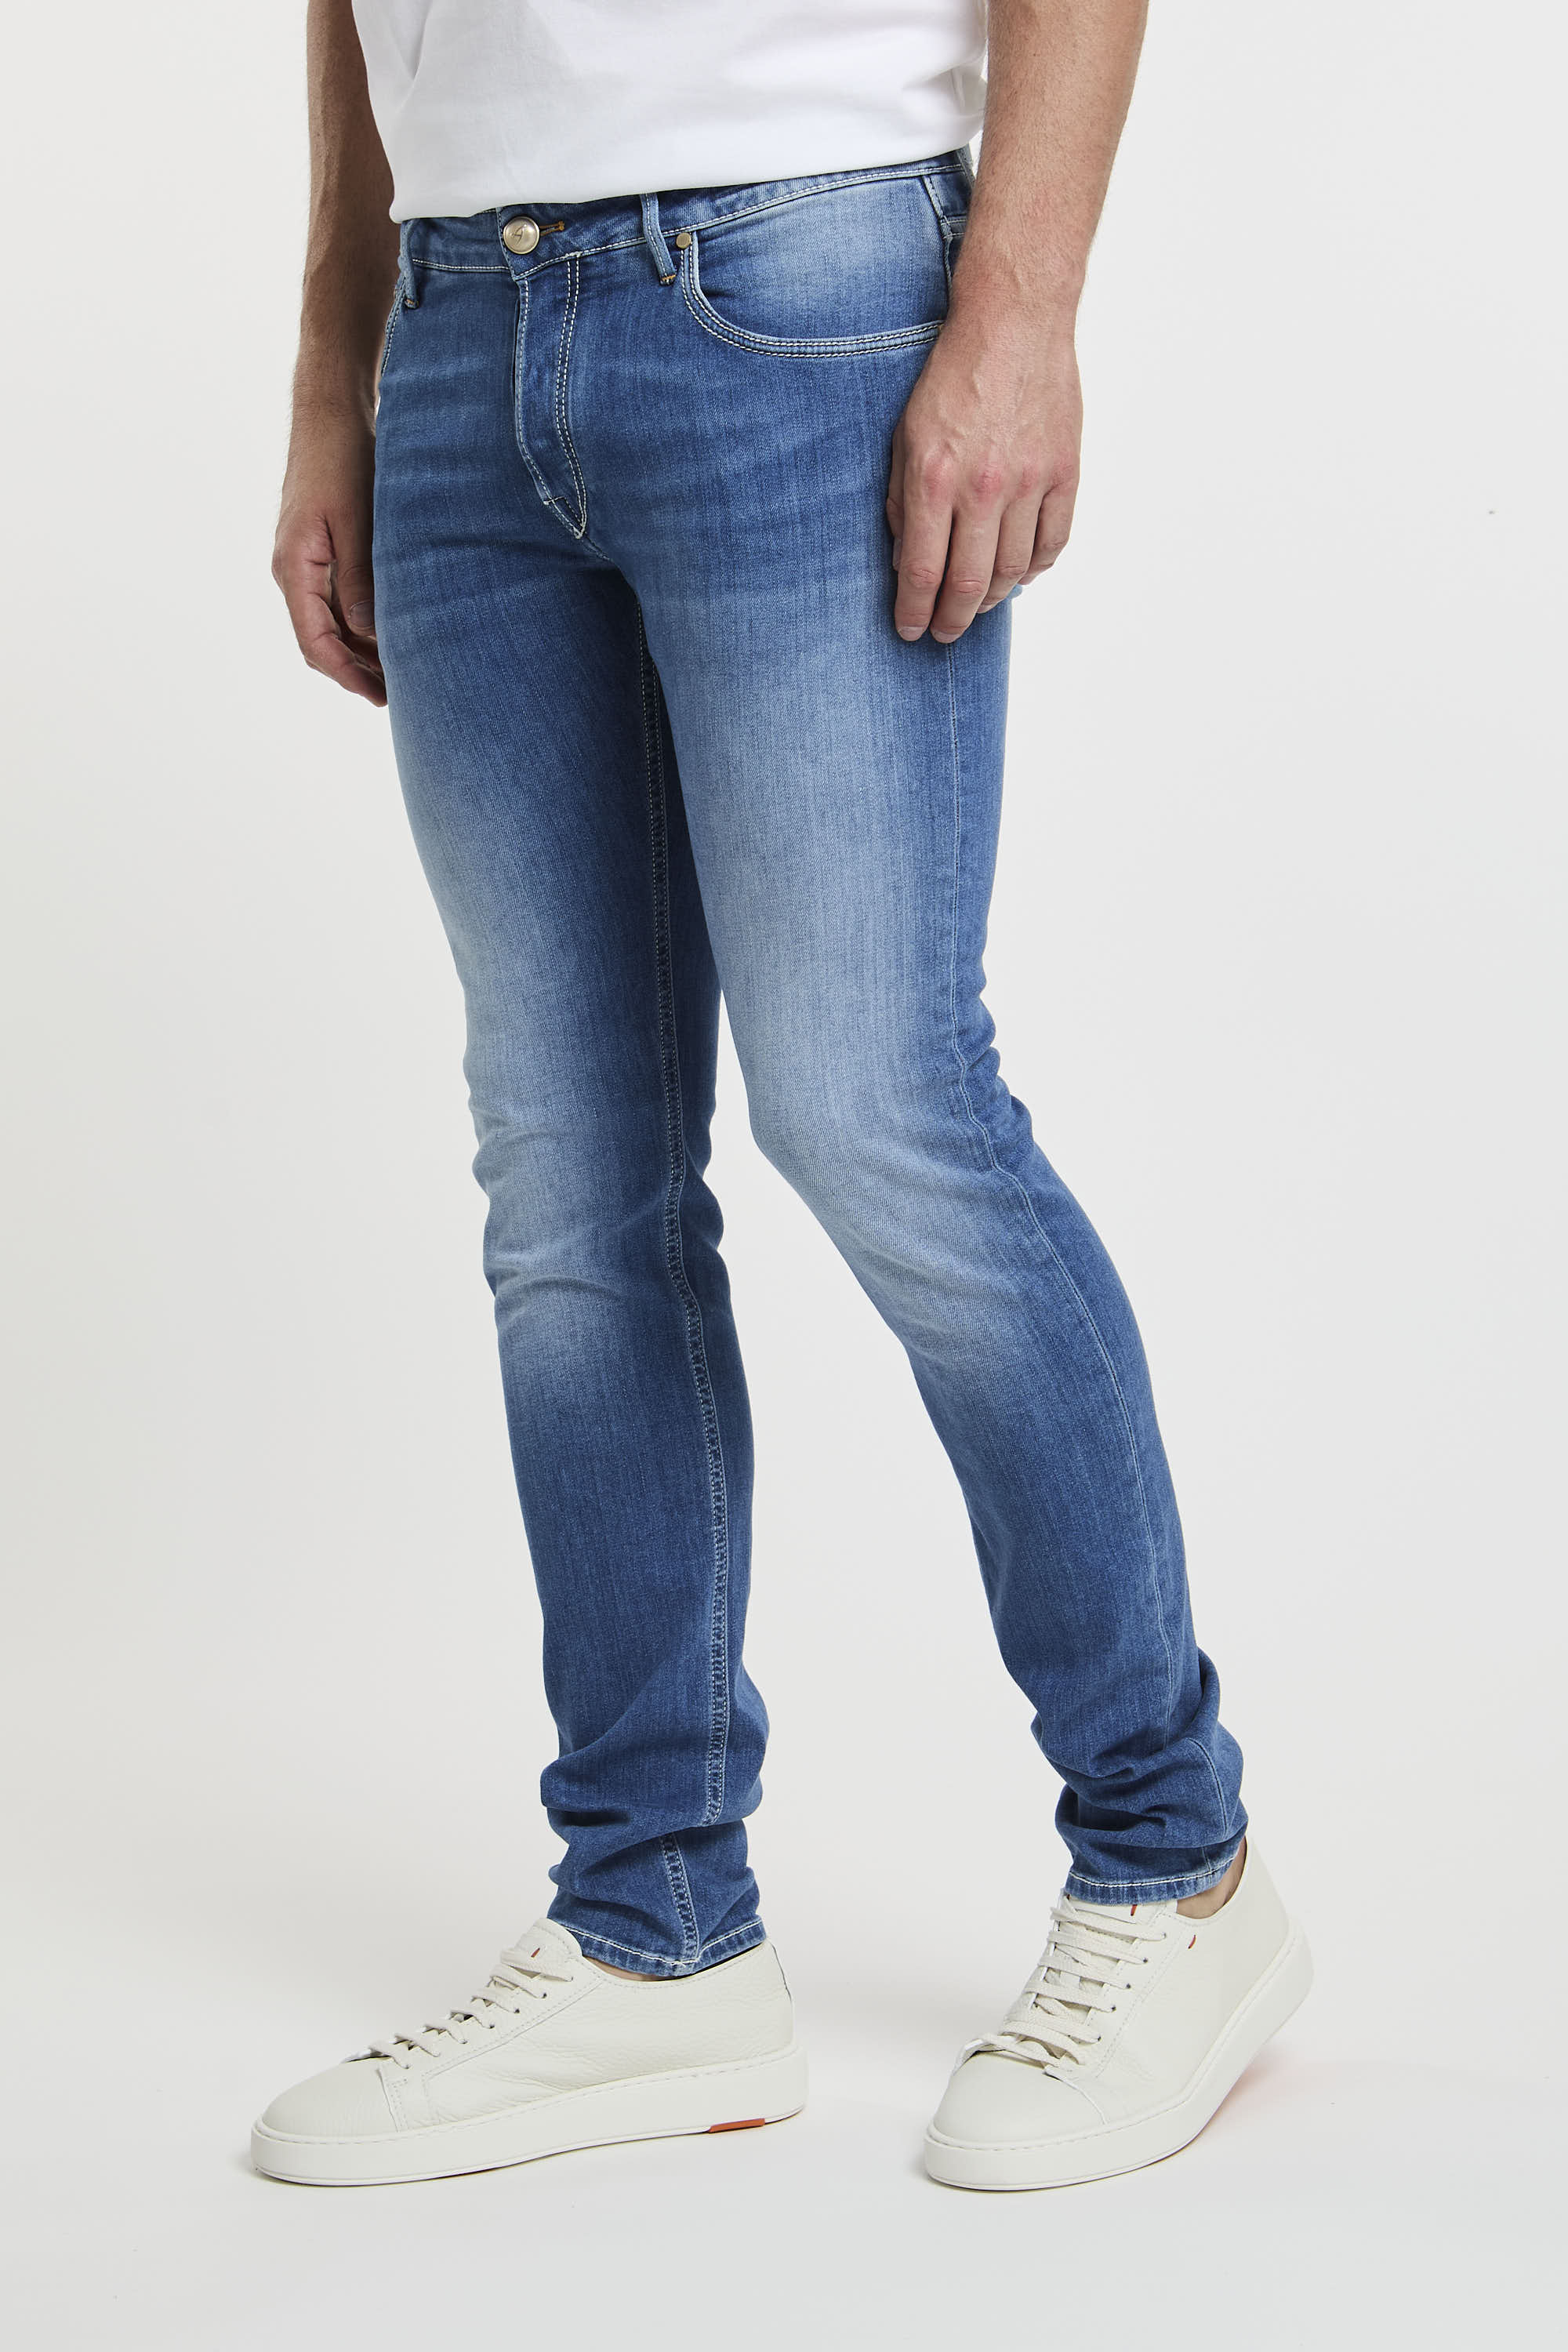 Handpicked Jeans Orvieto Cotton/Elastomultiester Denim-1